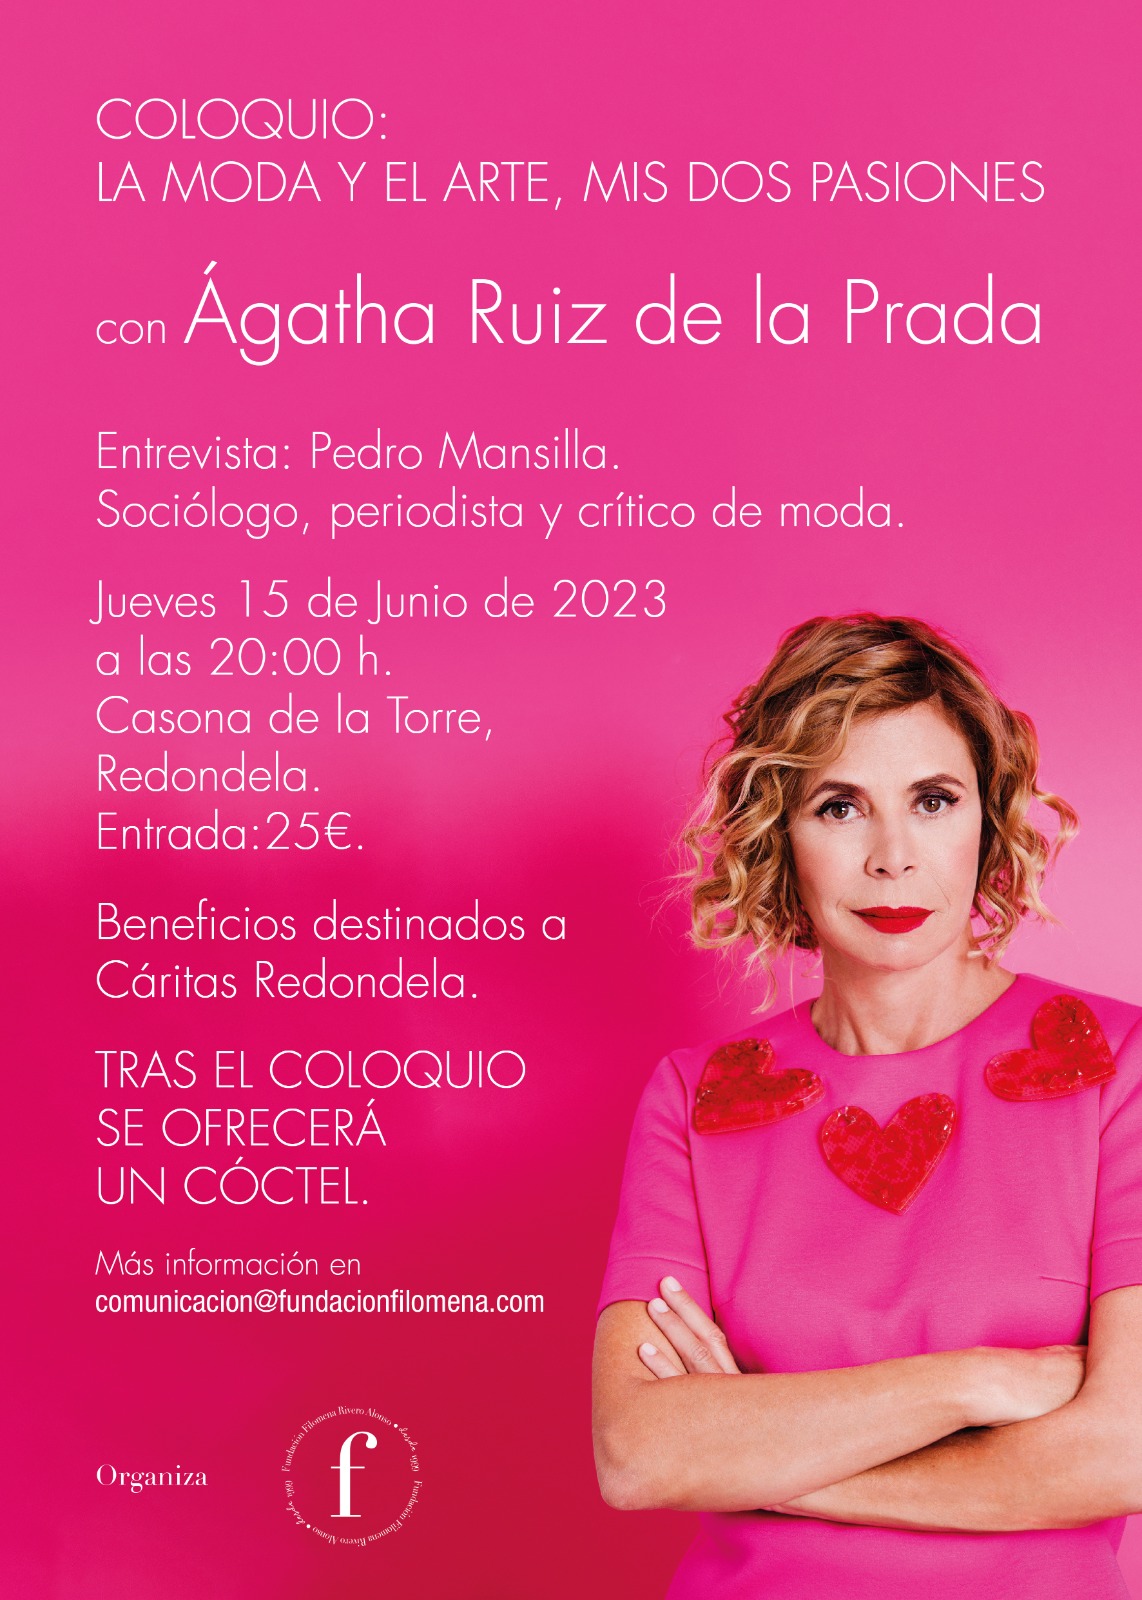 Agatha RuizdelaPrada (@agathardlp) / Twitter